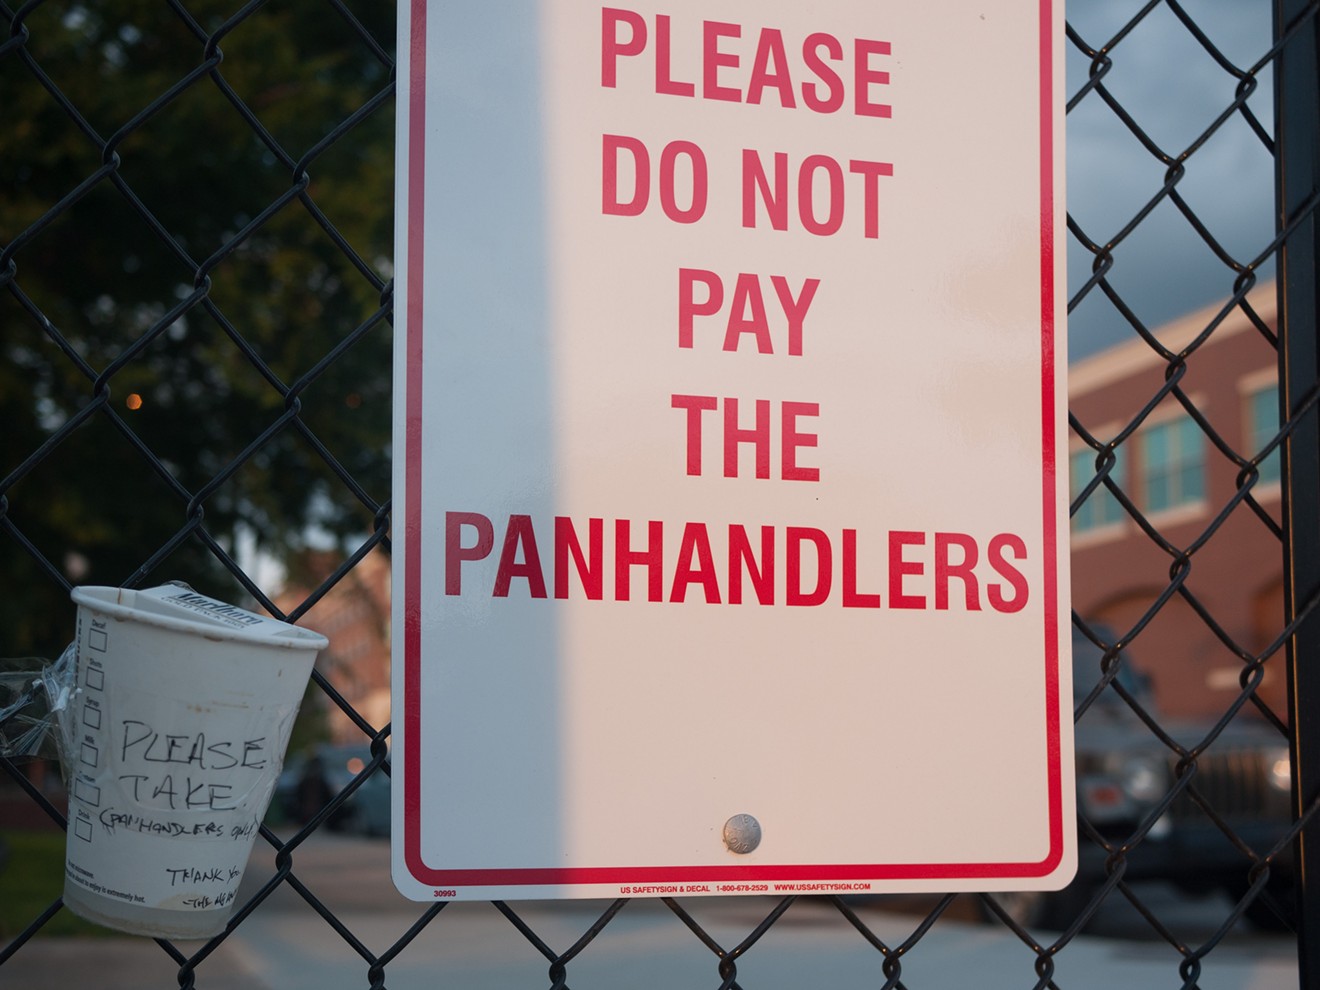 An innovative panhandling solution